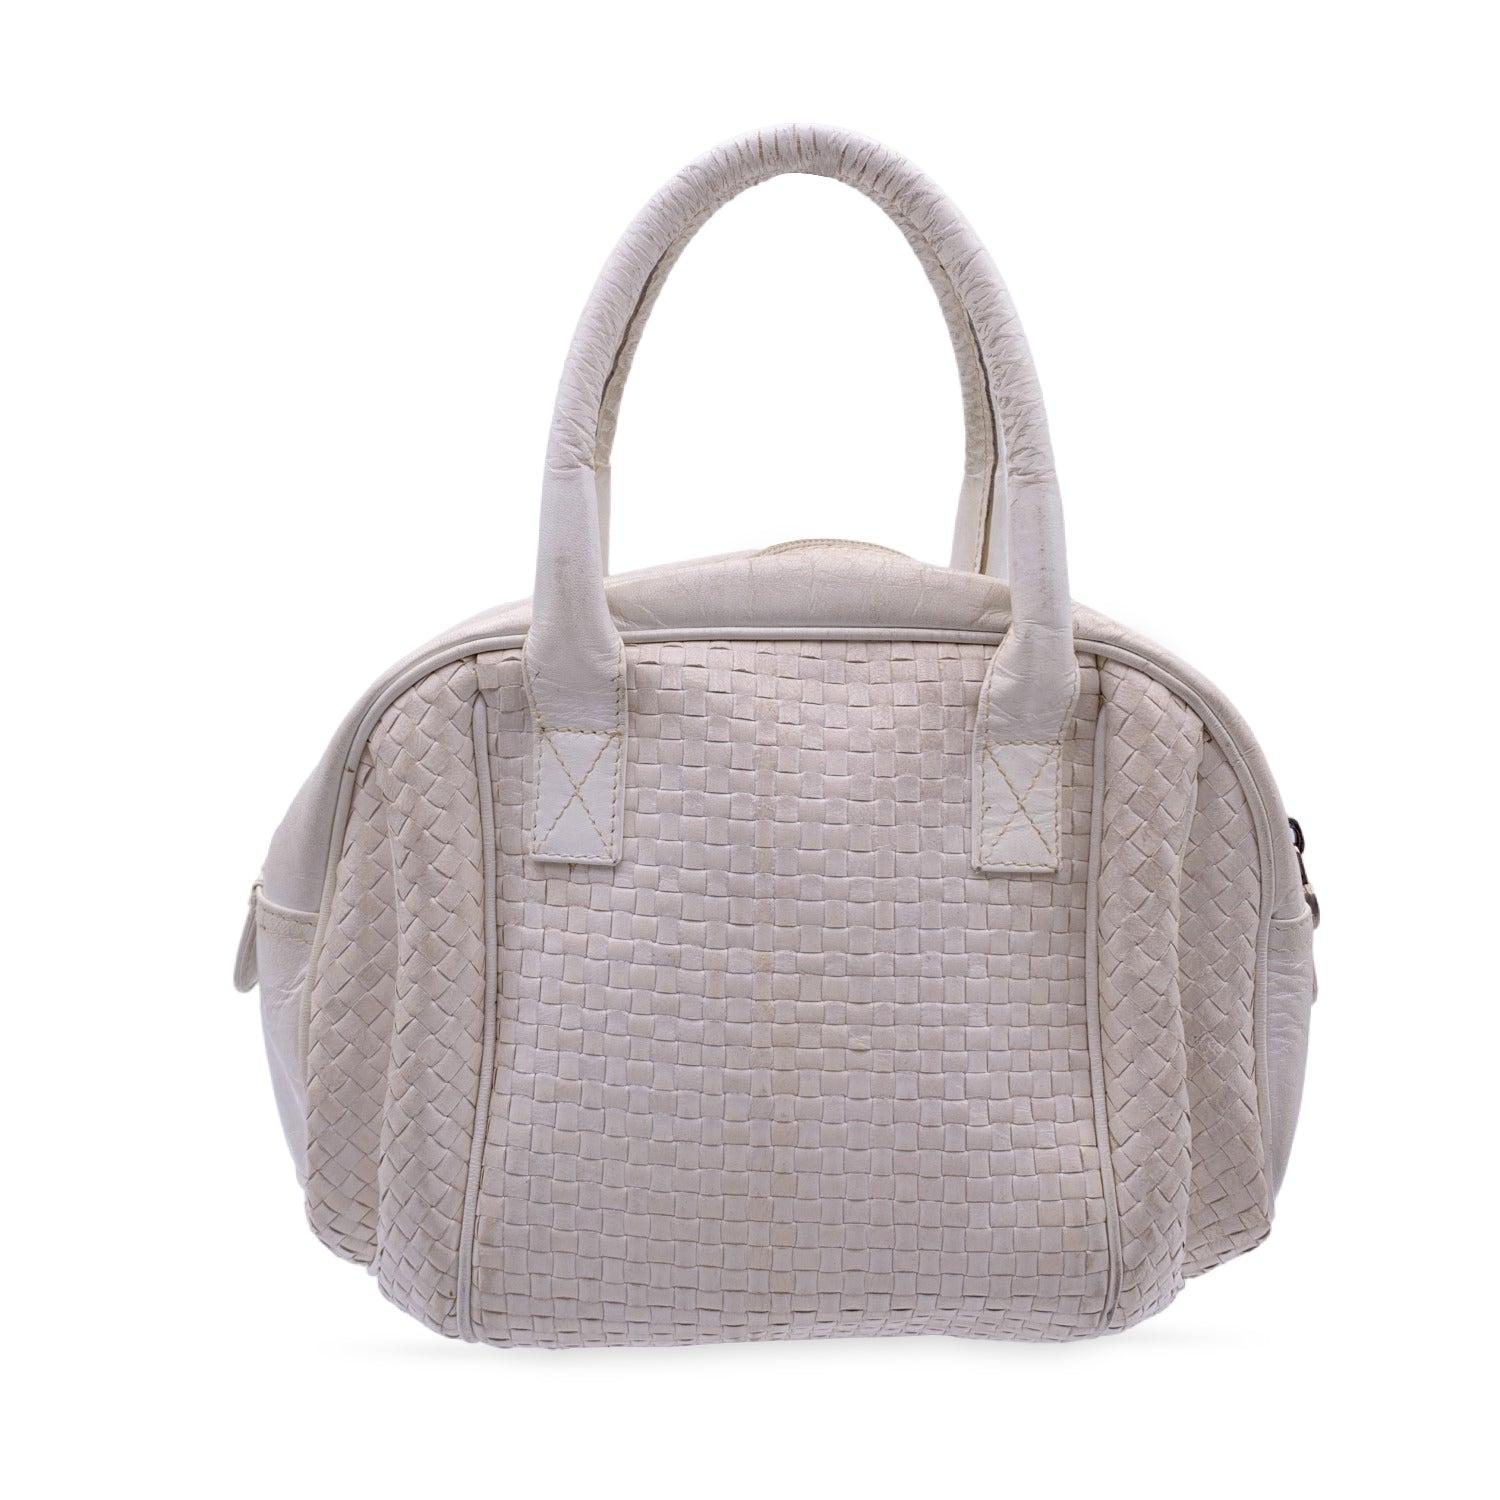 Gray Fendi Vintage White Woven Leather Handbag Bag Satchel